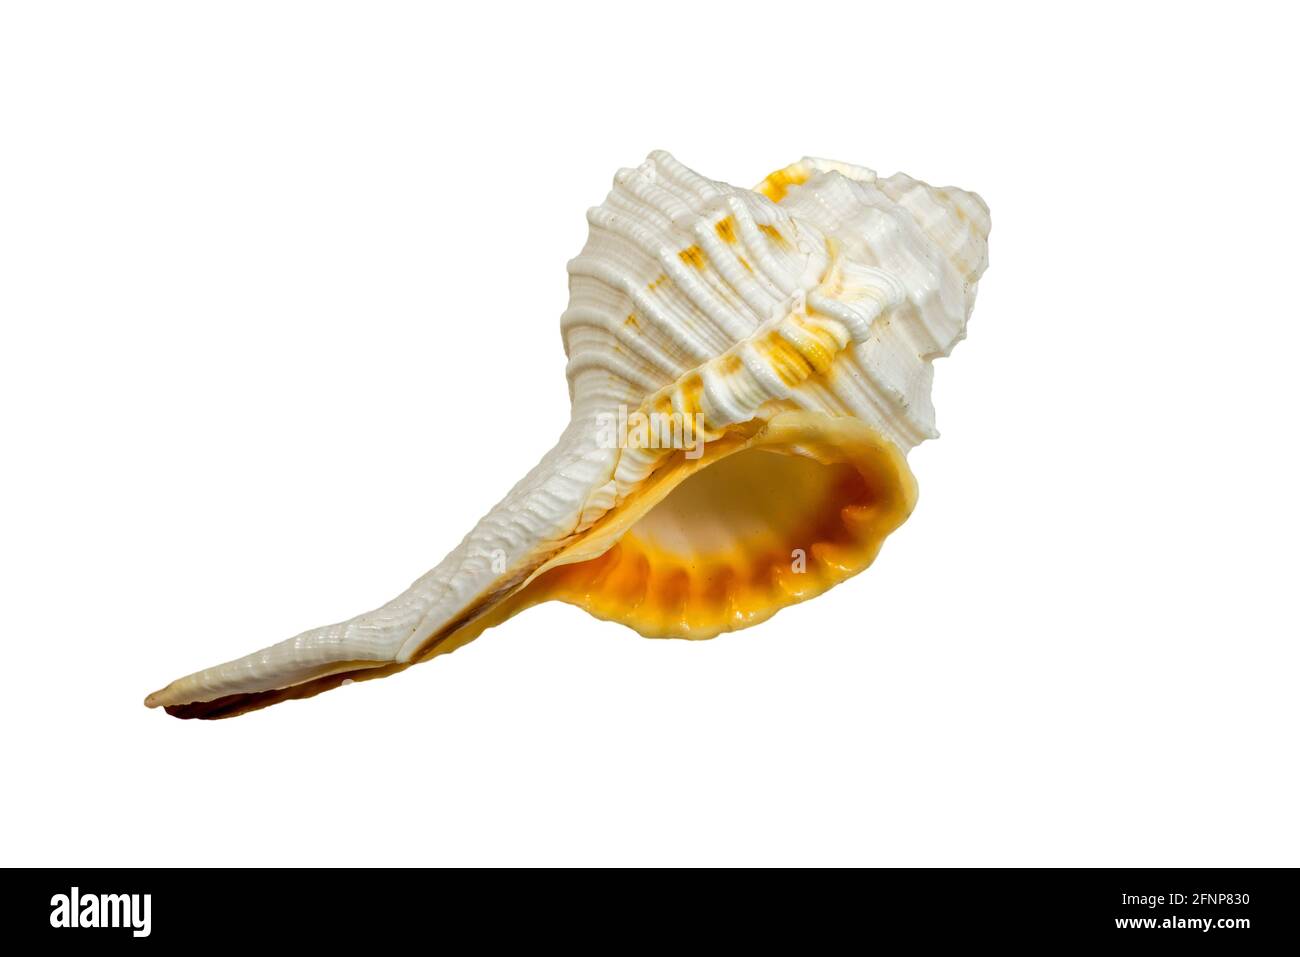 Espèce Haustellum, escargot de mer, mollusque de gastropodes marins de la famille des Muricidae, escargots de murex / escargots de roche sur fond blanc Banque D'Images